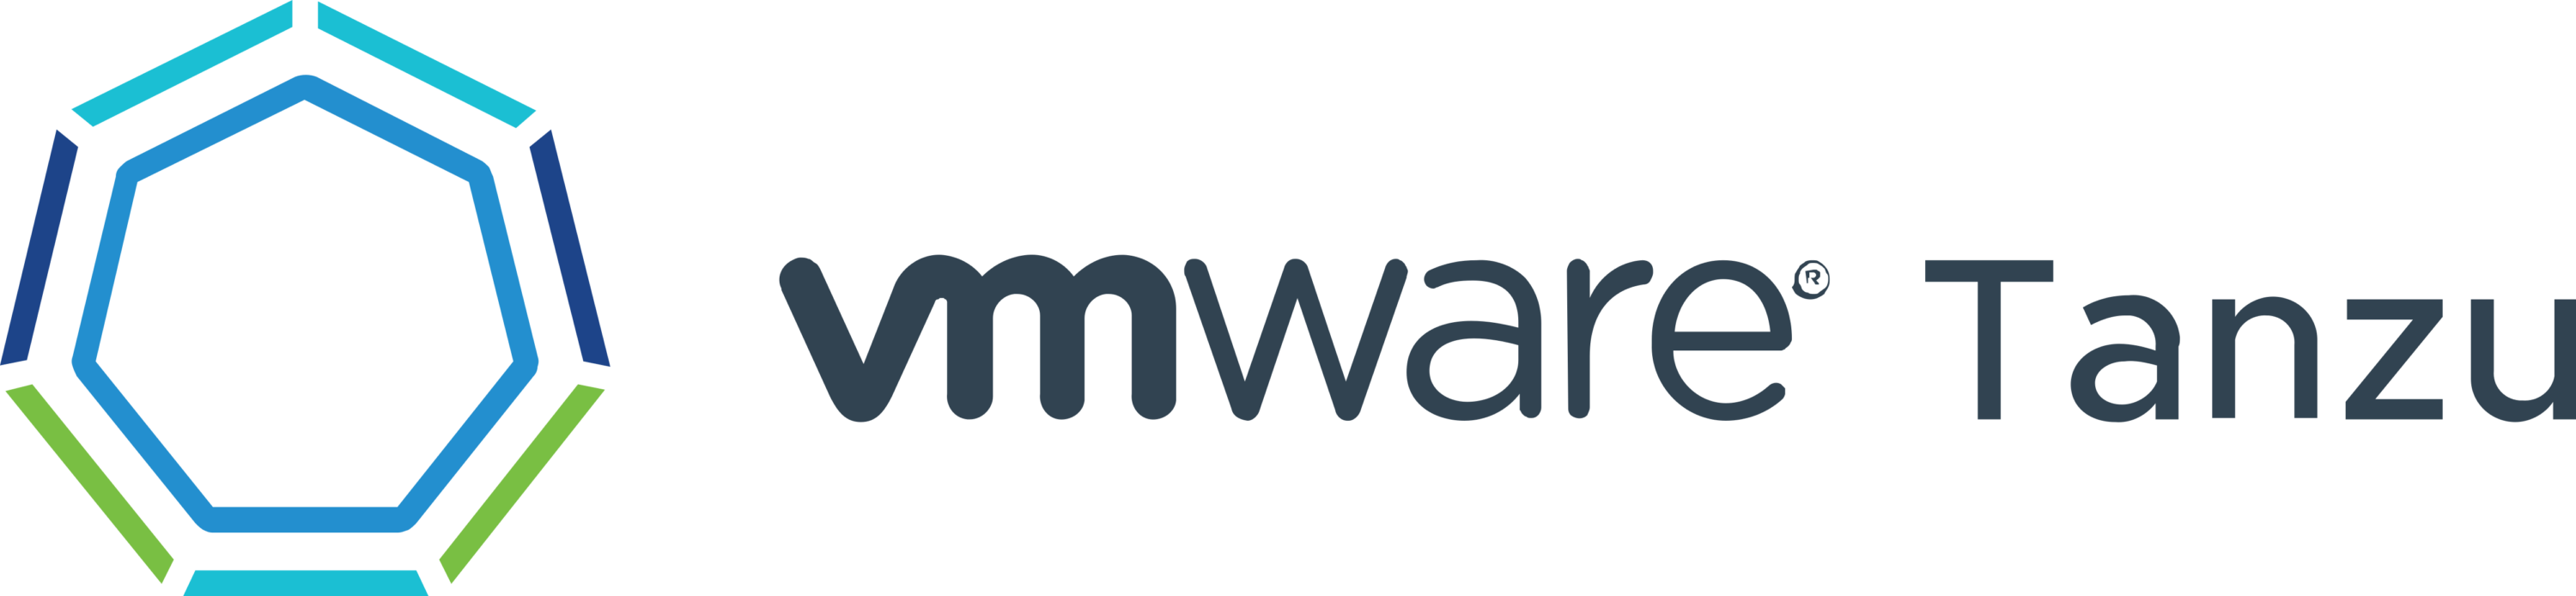 Vmware Tanzu Logo